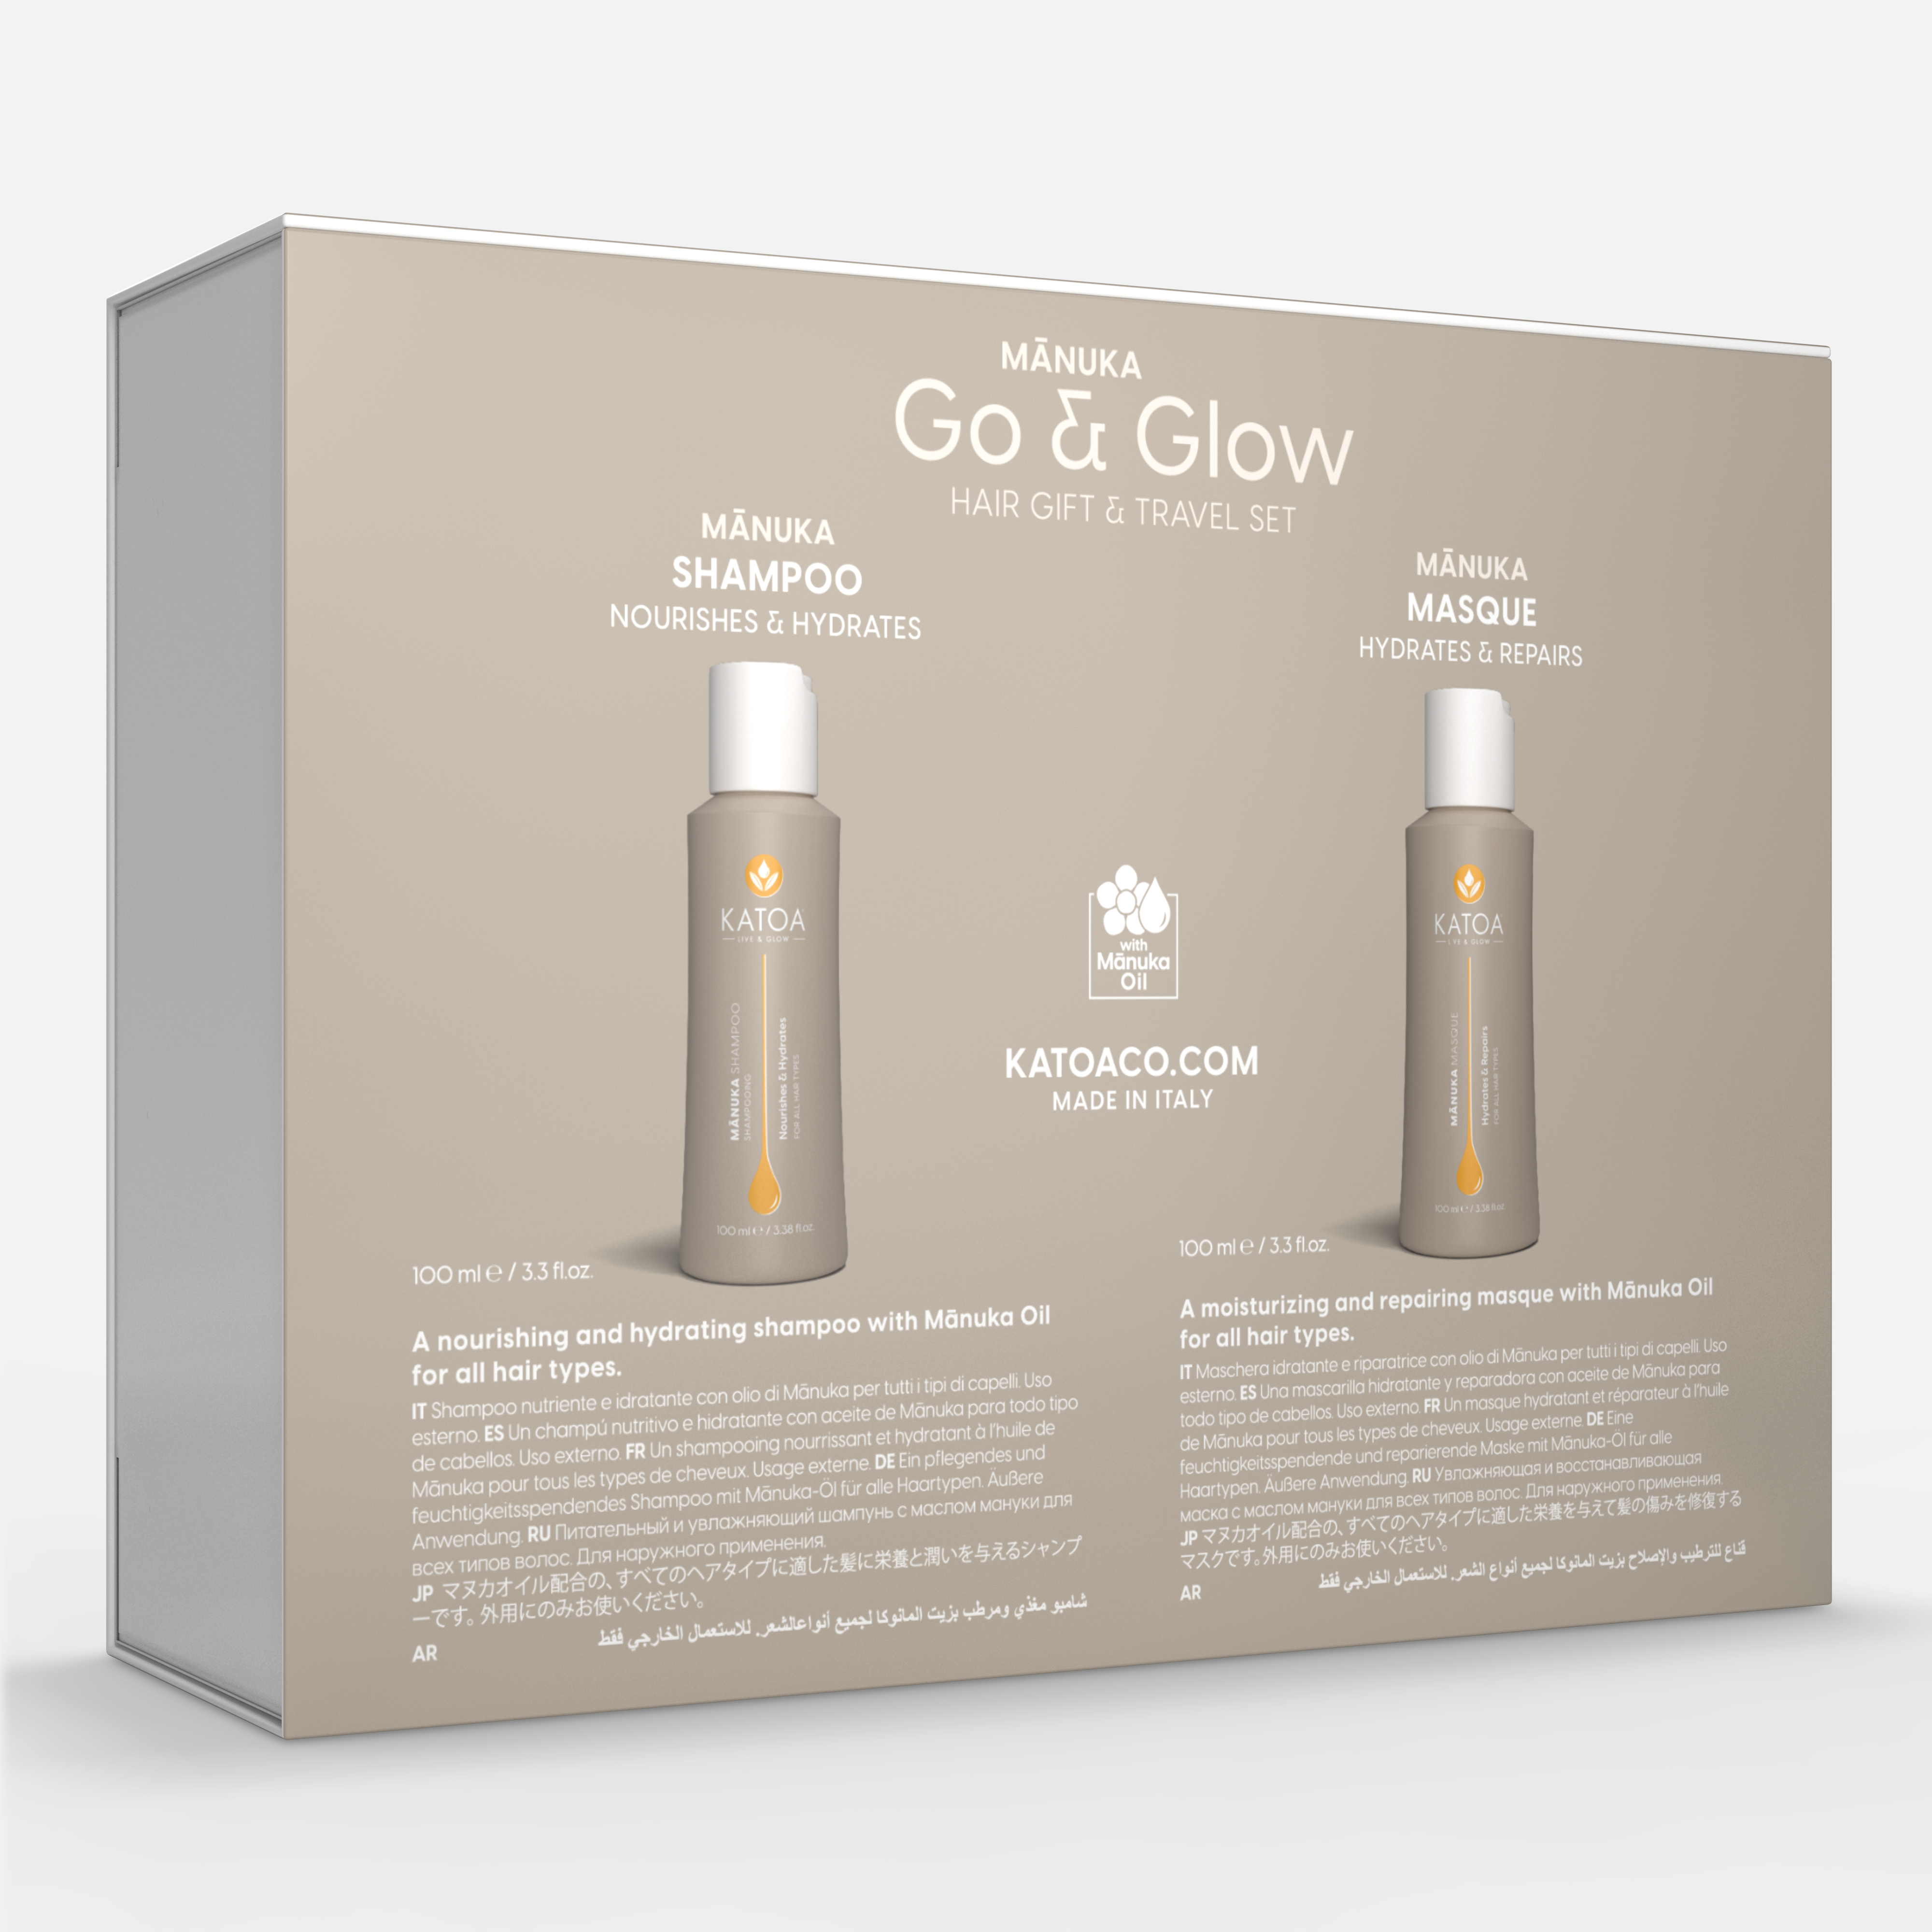 Go & Glow Hair Gift & Travel Set